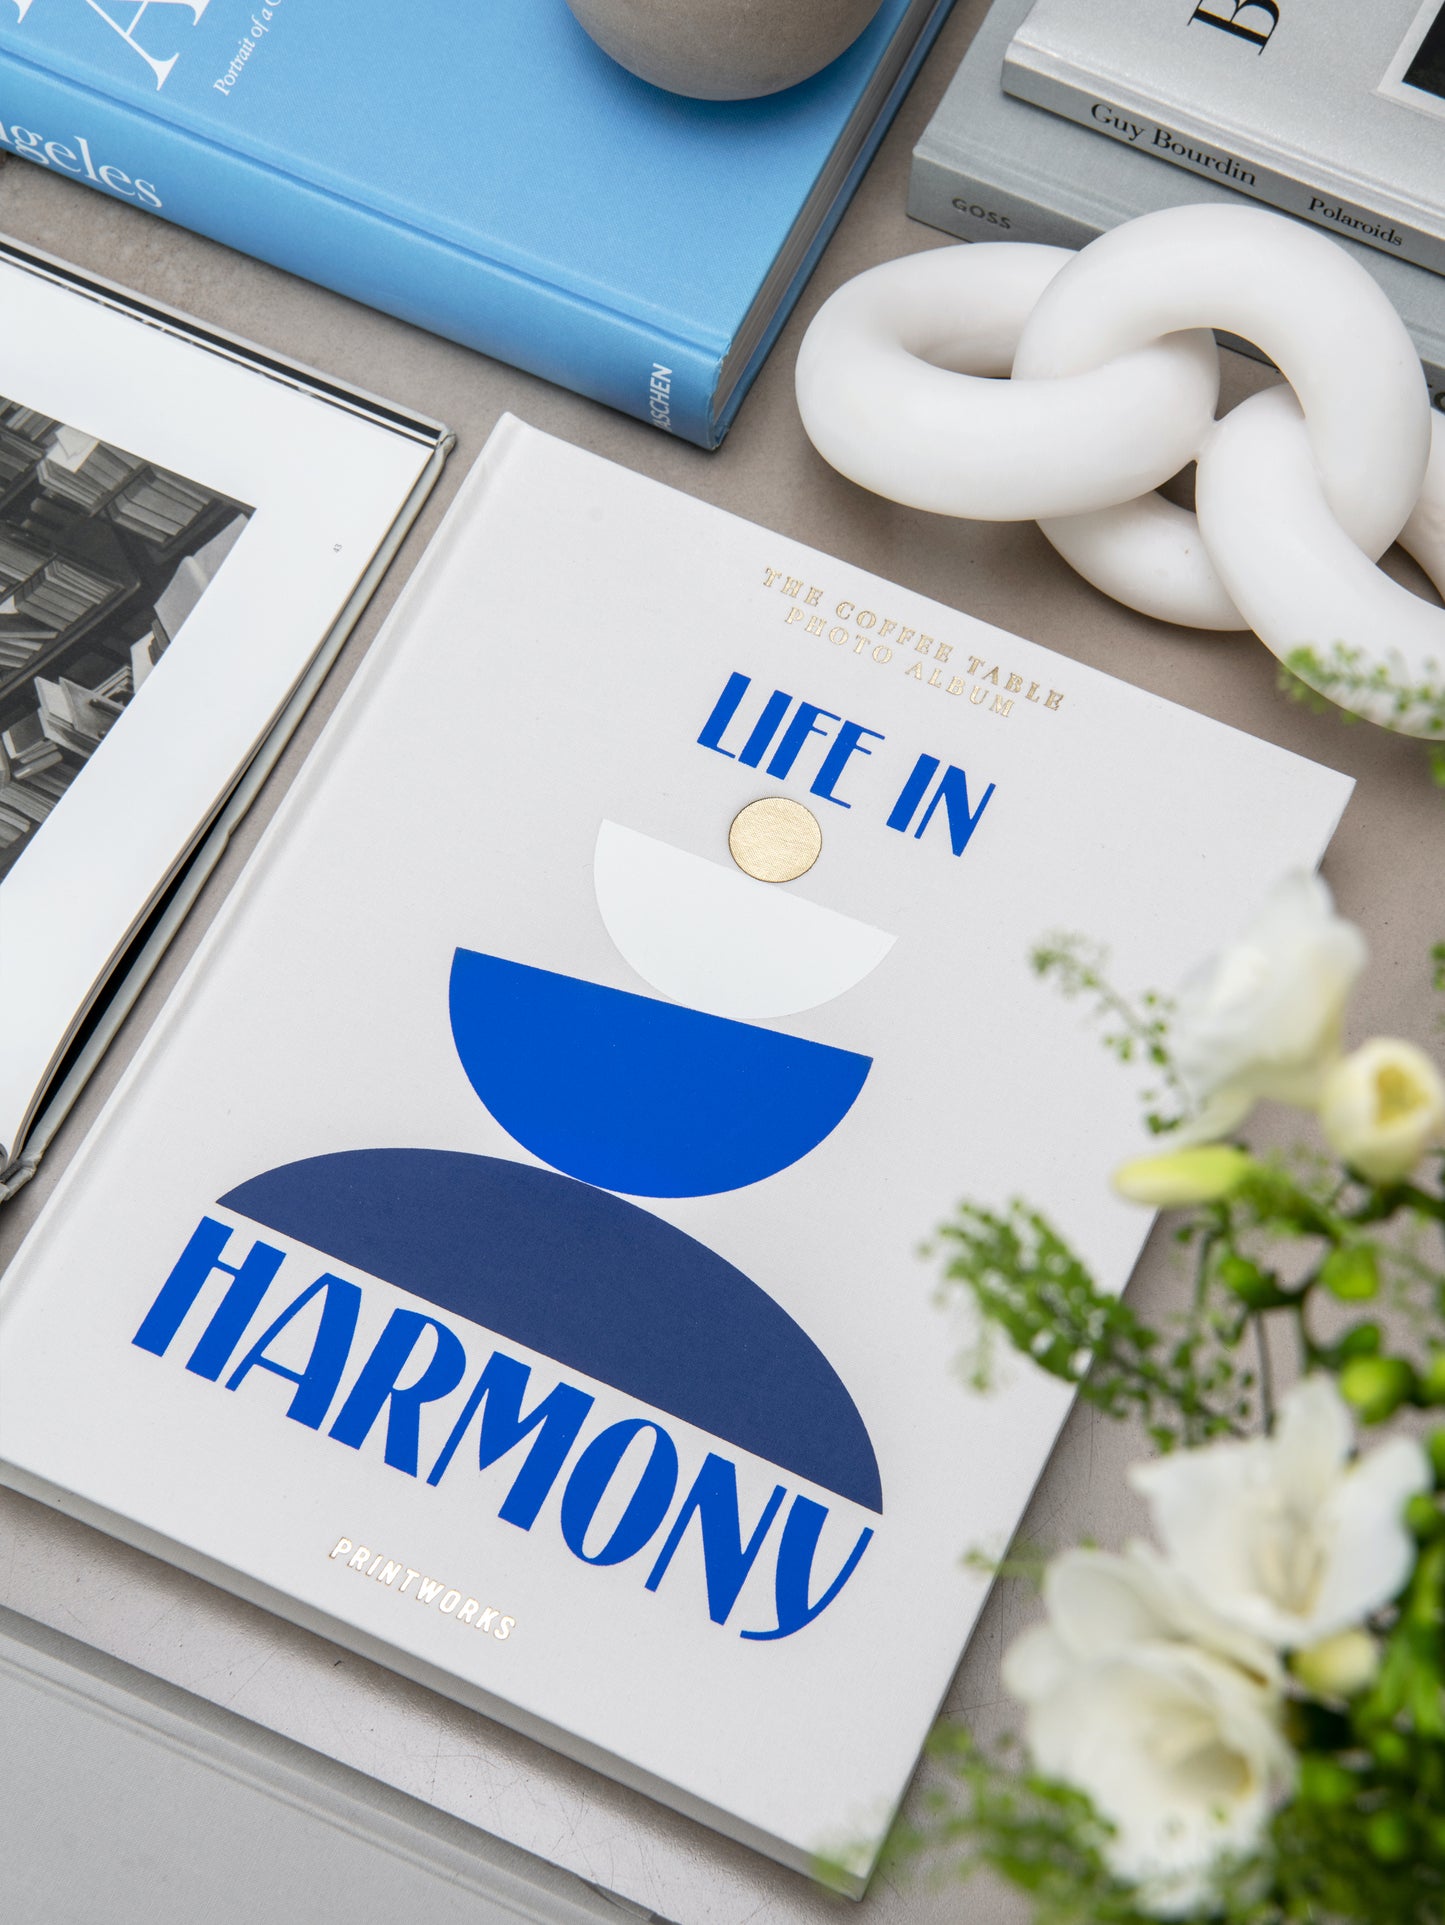 Luxusní fotoalbum Life in Harmony značky Printworks